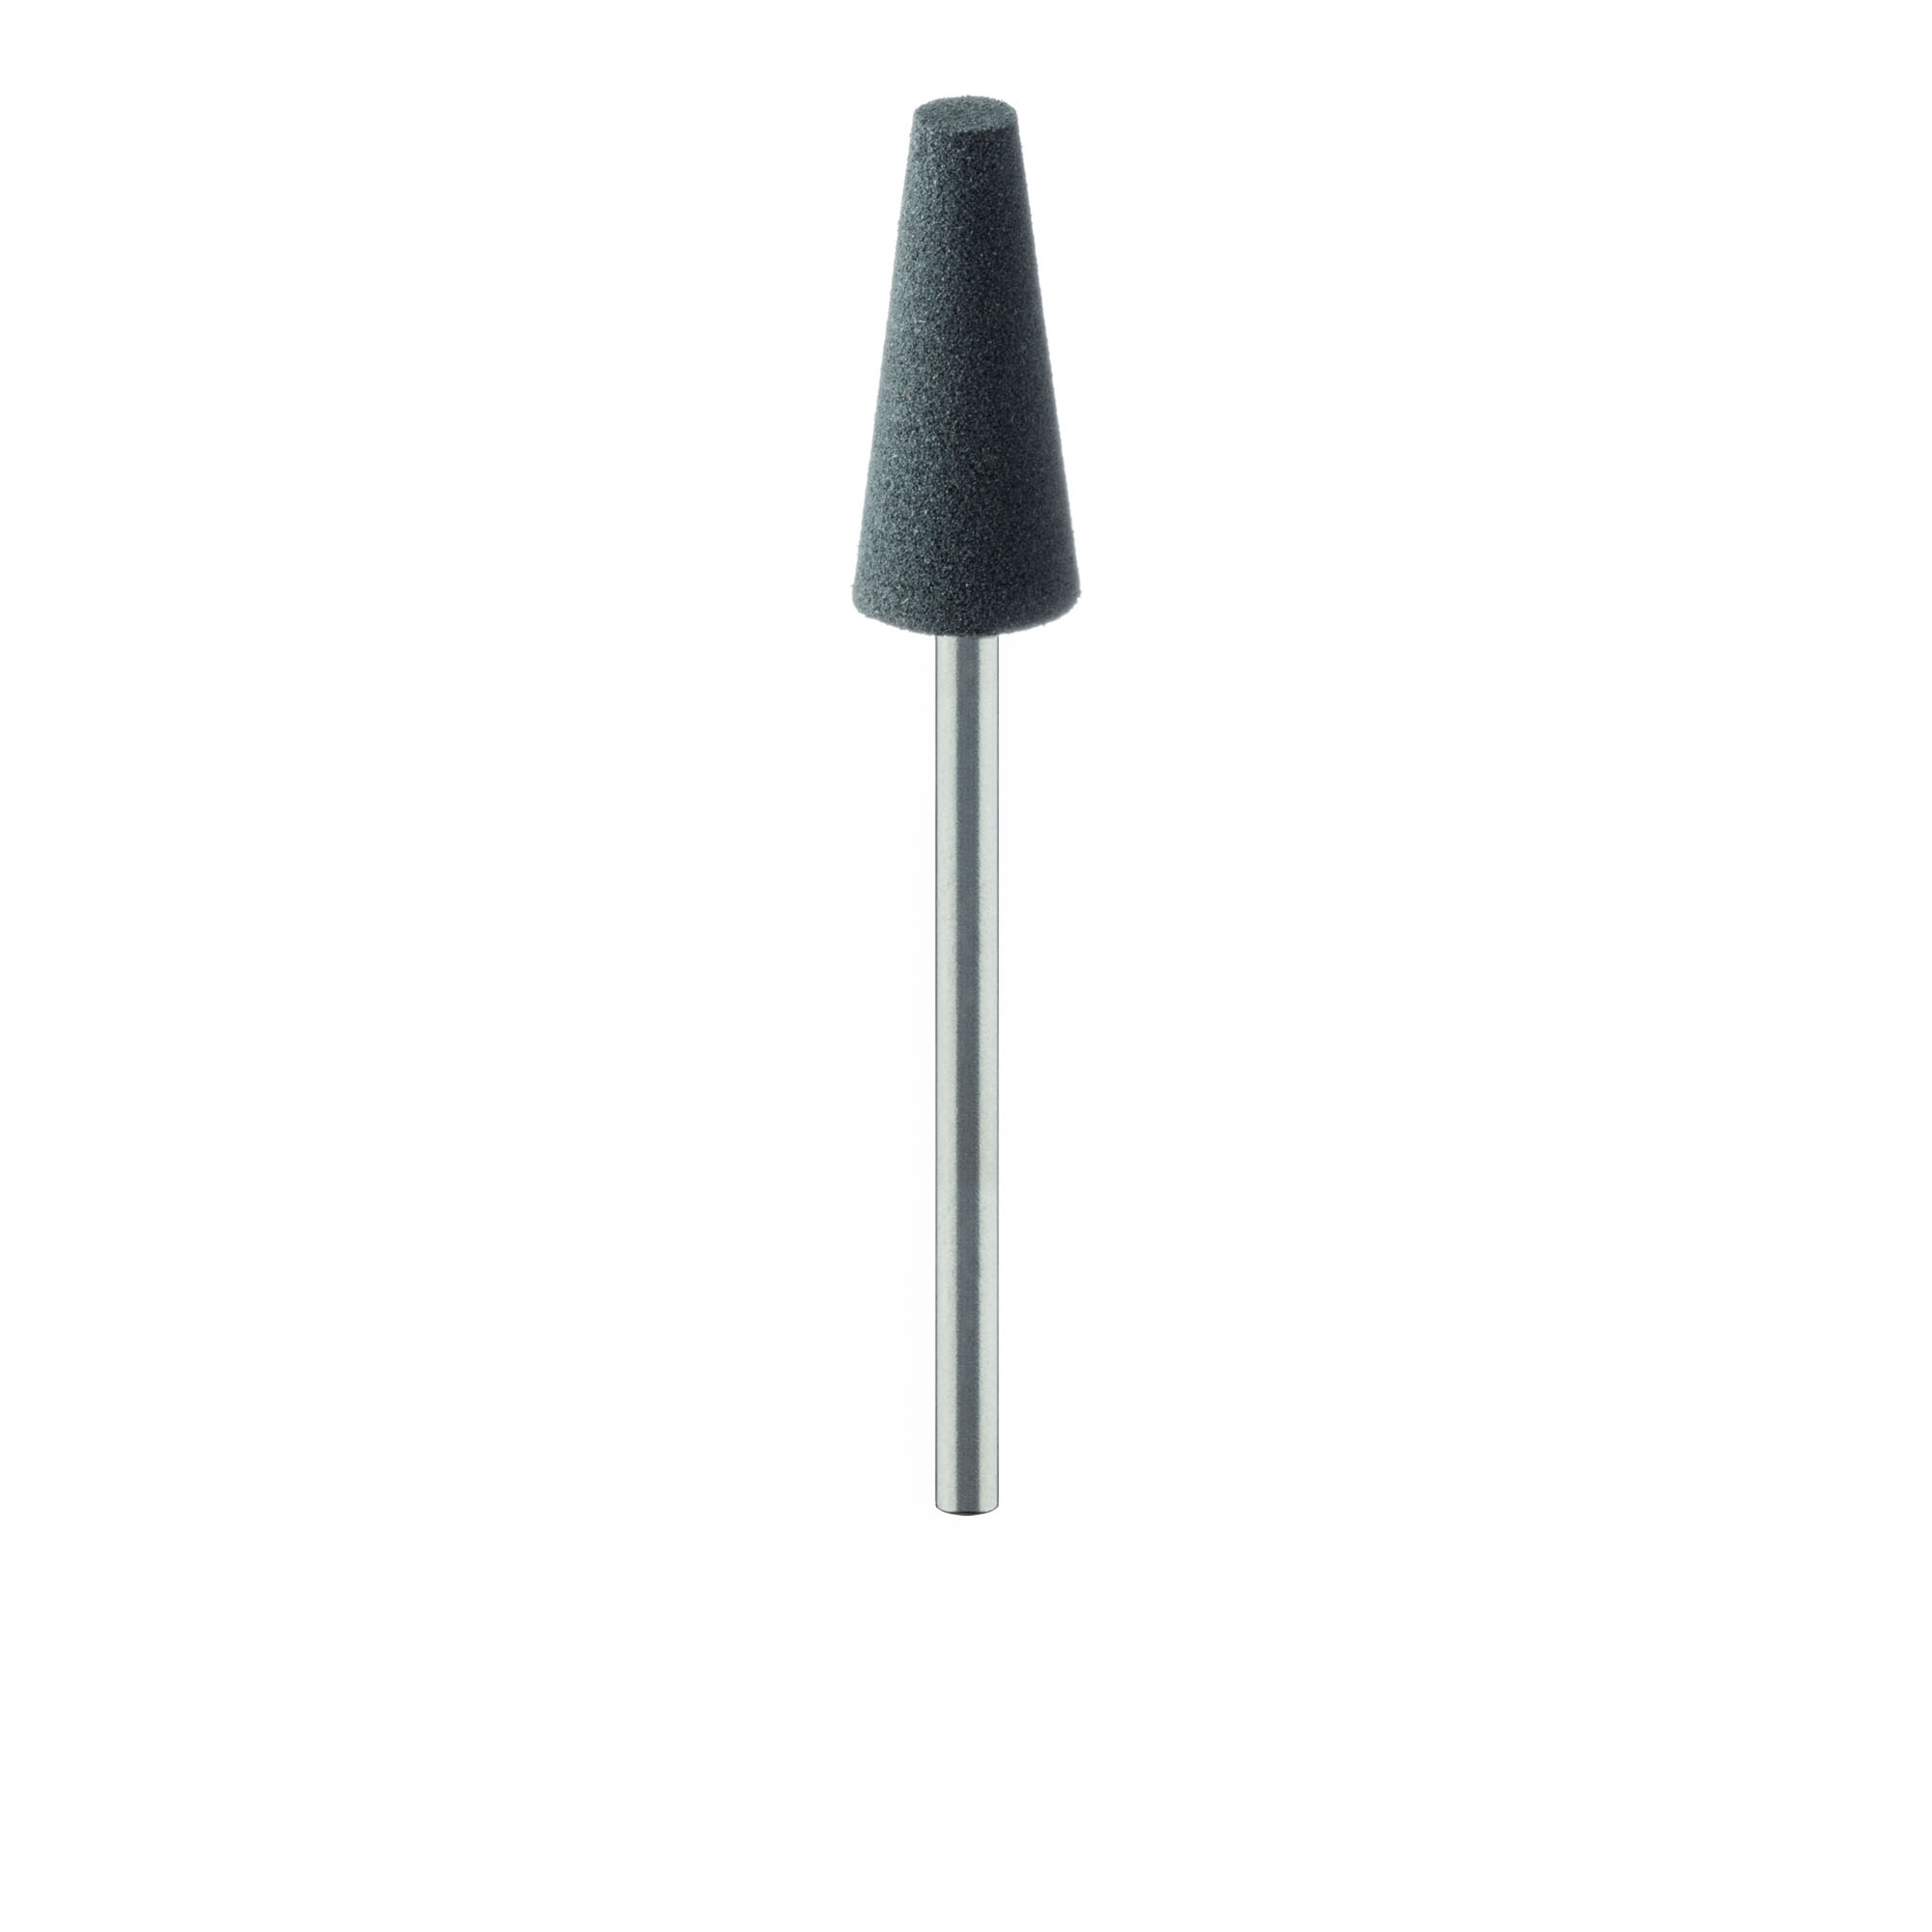 9577P-080-HP-GREY Polisher, For Acrylics, Grey, Flat End Cone, 8mm Ø, Polishing, HP